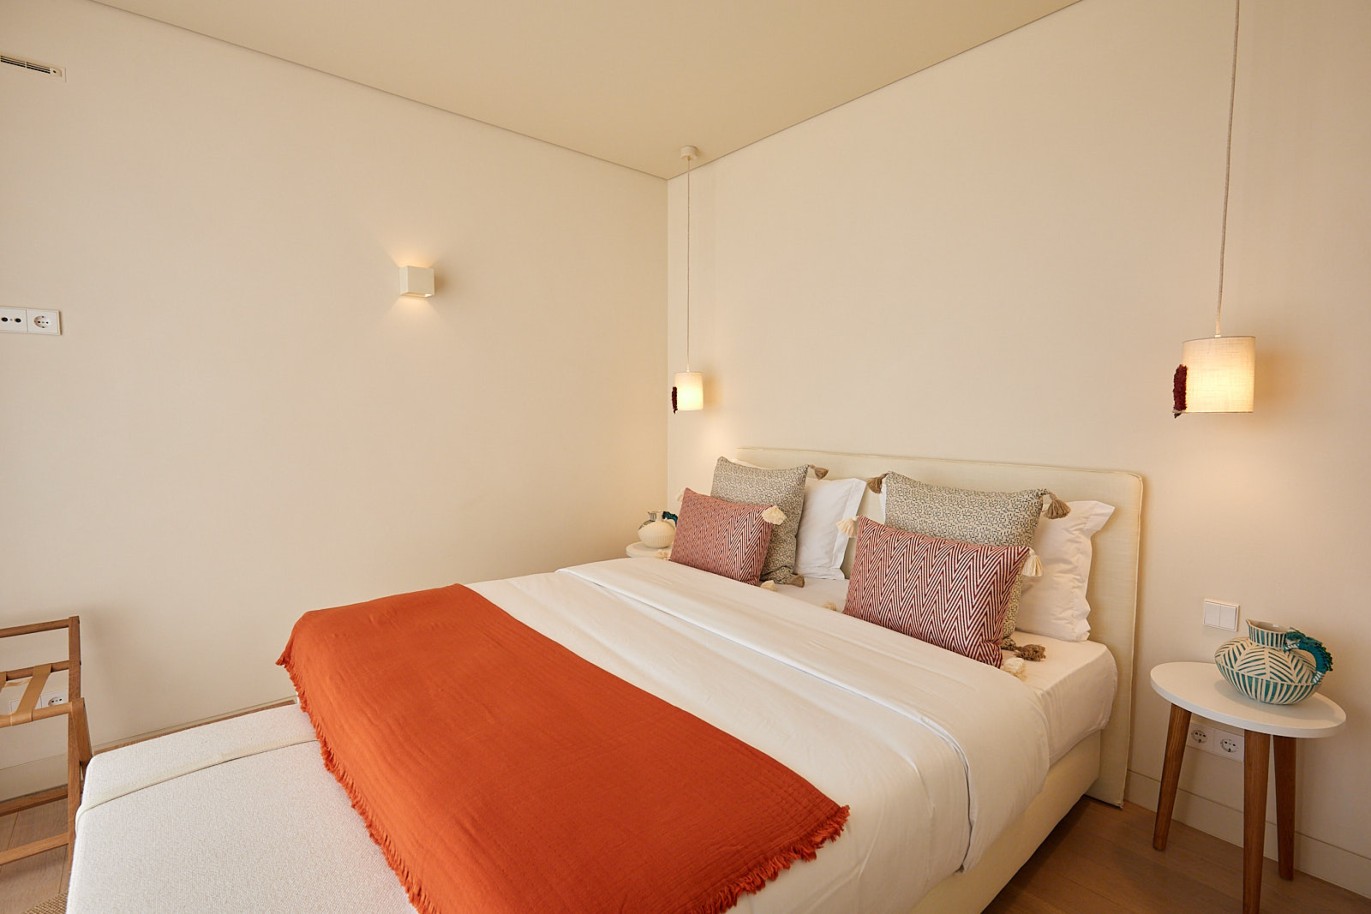 2 bedroom apartment in resort, for sale in Porches, Algarve_230586